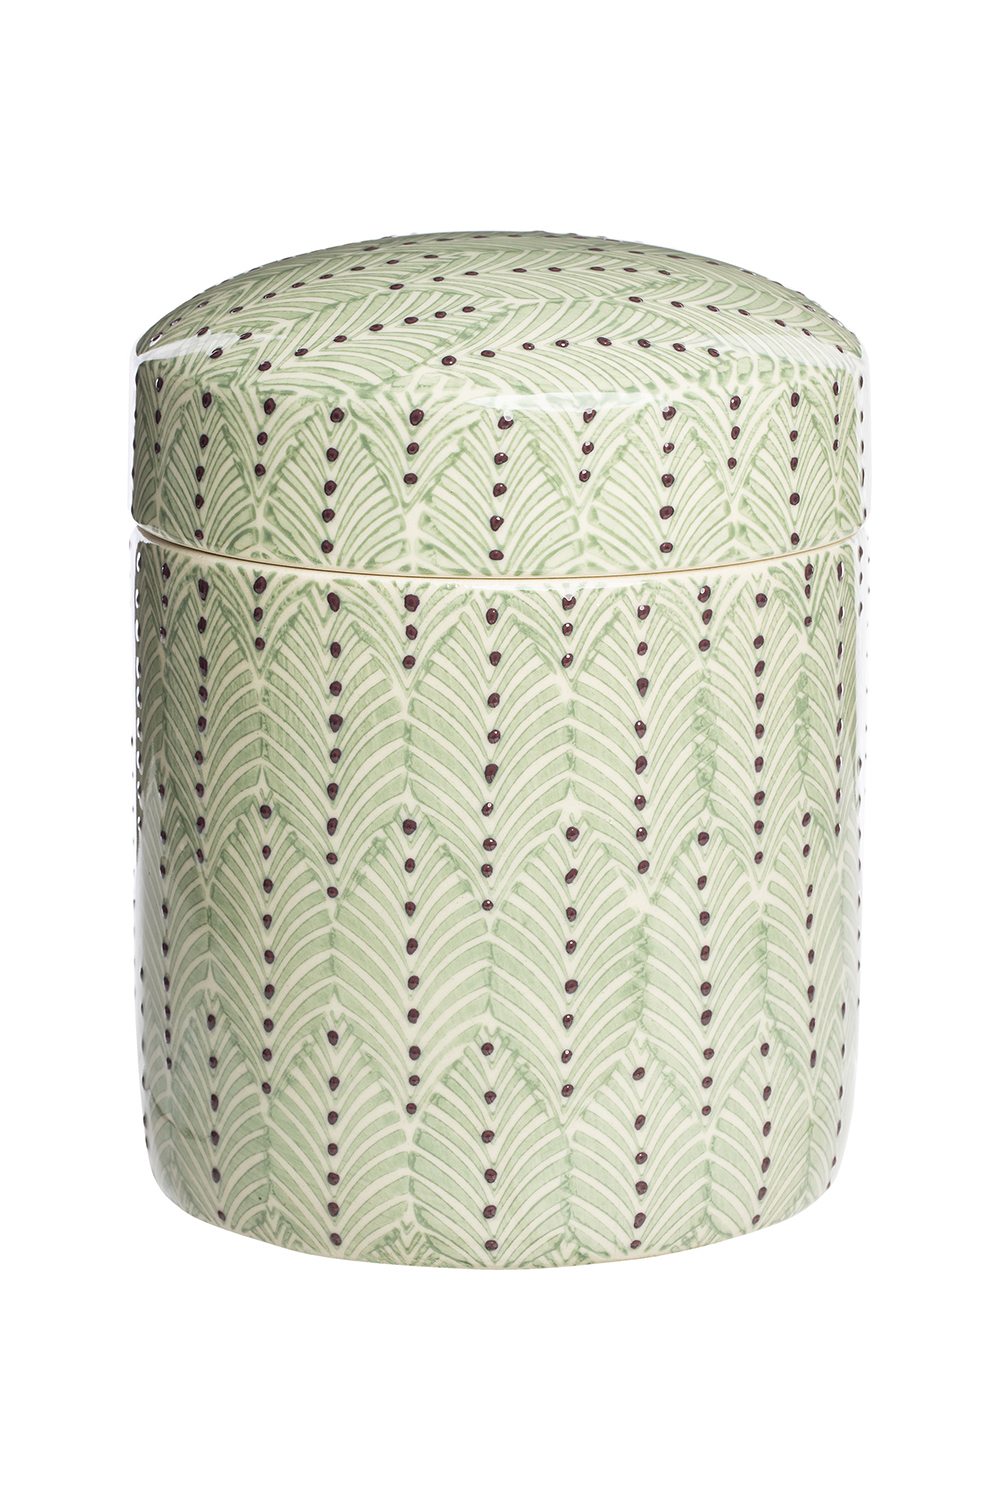 Tranquillo Natural and Green Ushio Ceramic Jar